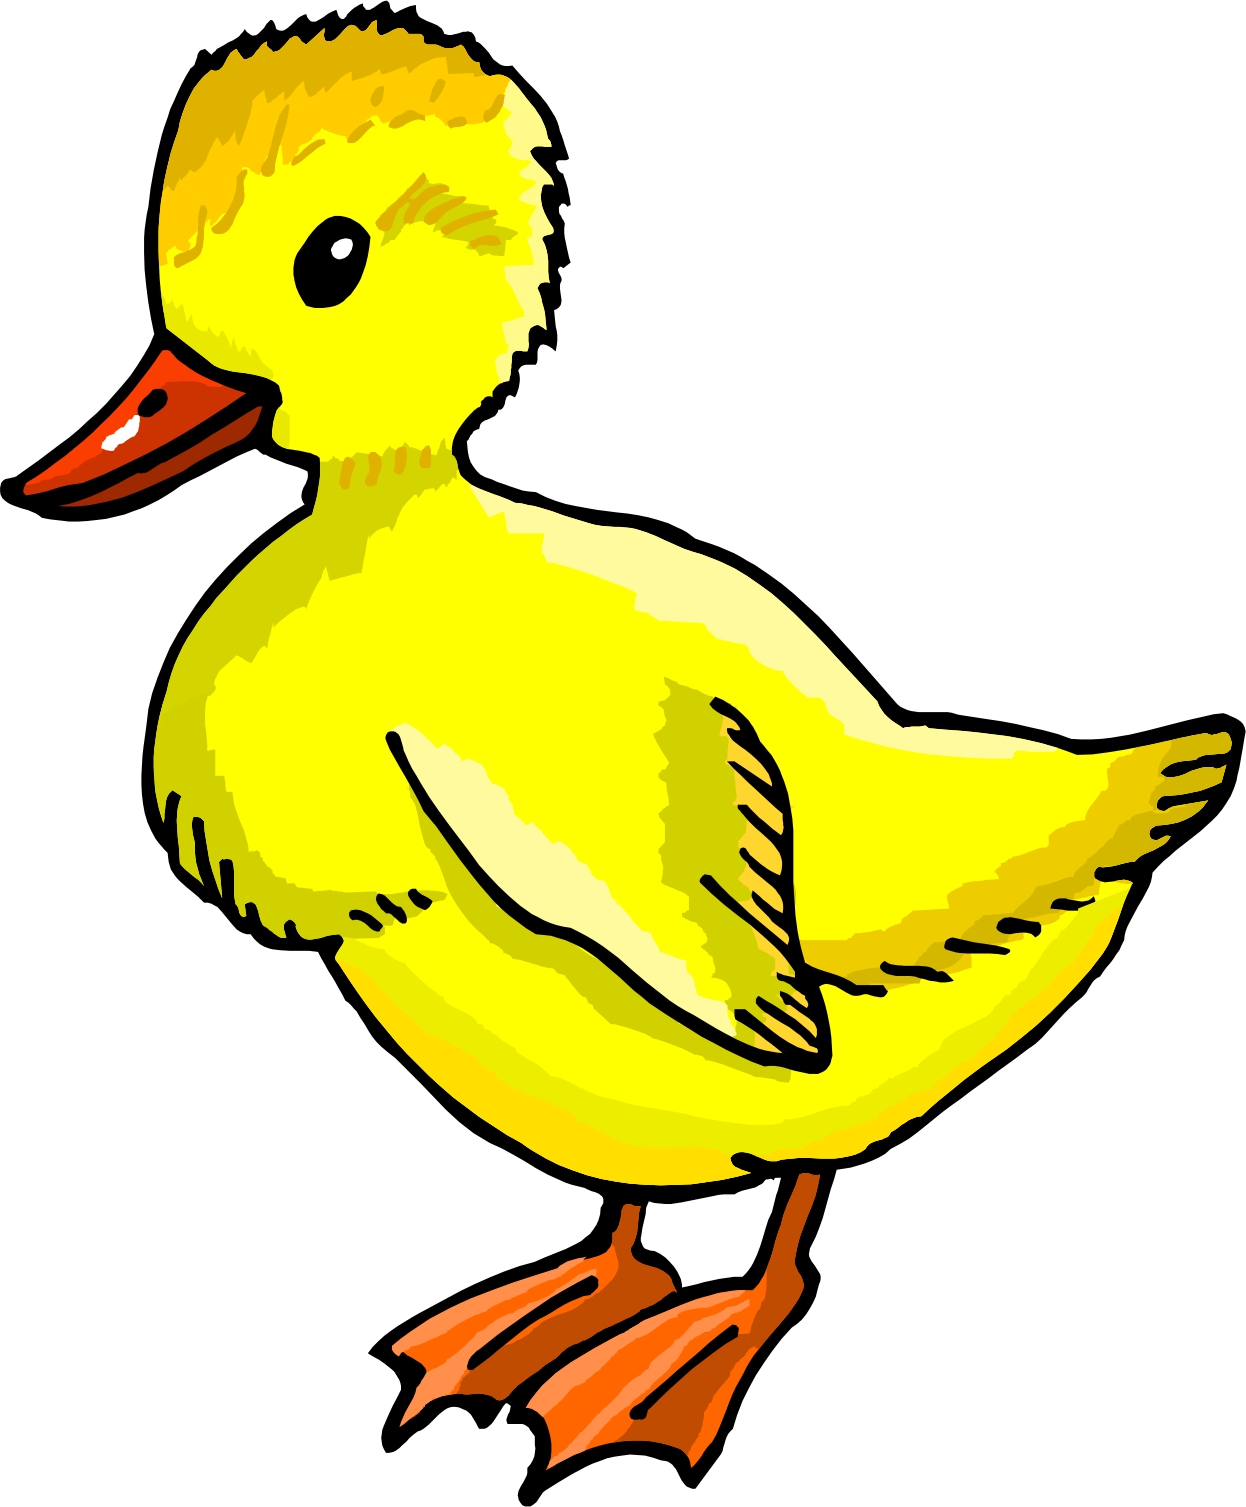 Ducklings Cartoons - ClipArt Best